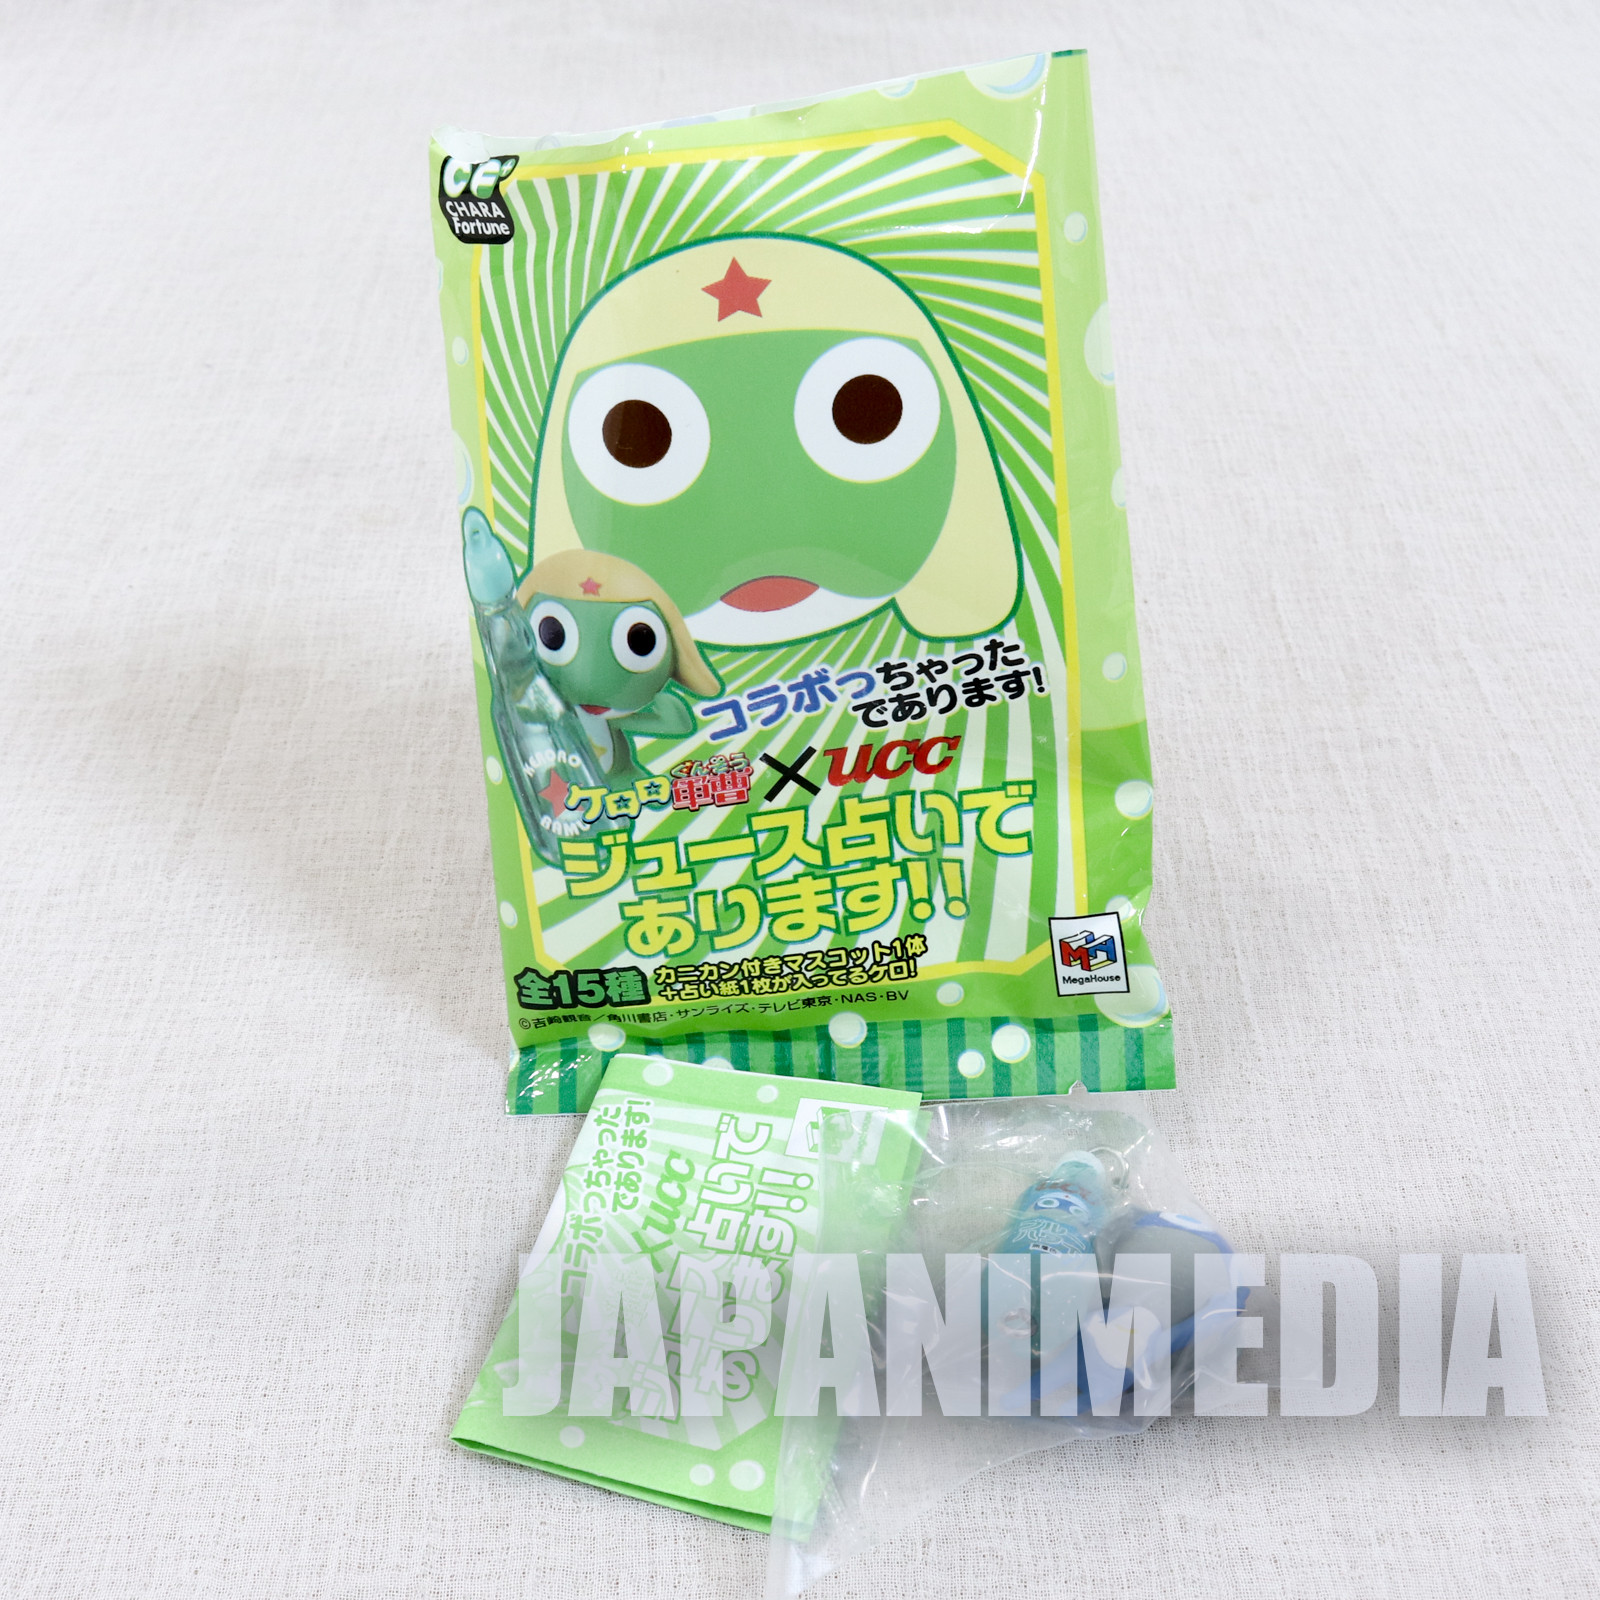 Sgt. Frog Keroro Gunso Dororo Mascot #3 Megahouse JAPAN ANIME MANGA